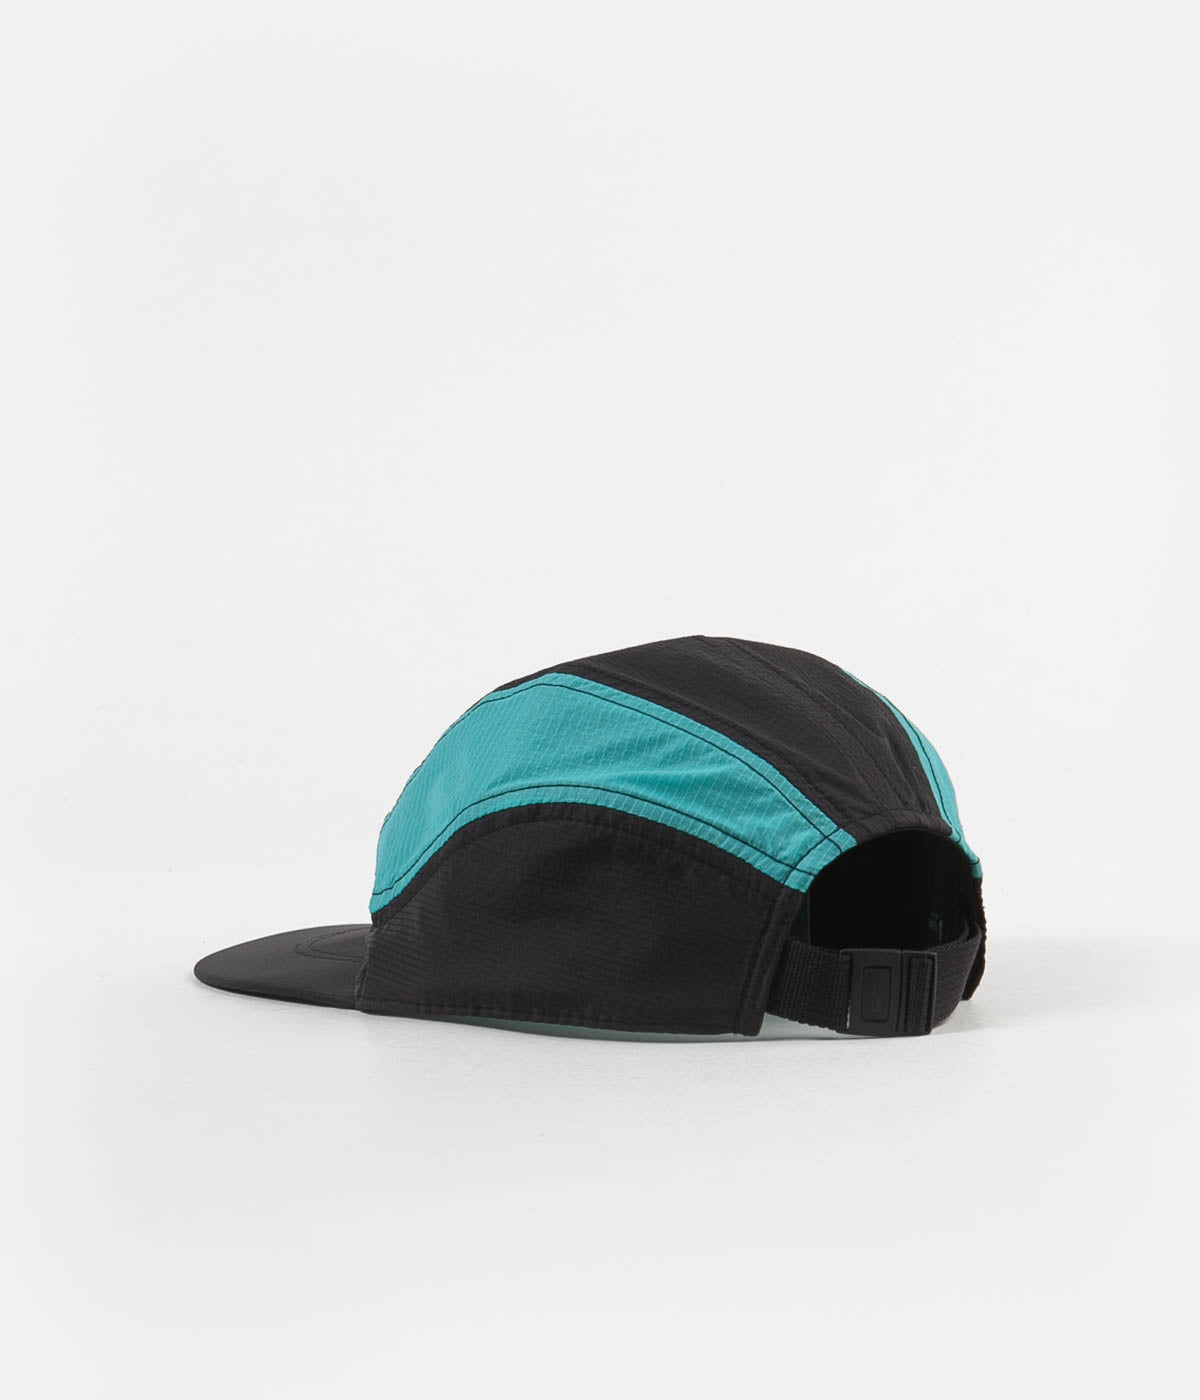 Nike SB Tailwind Cap - Black / Cabana 